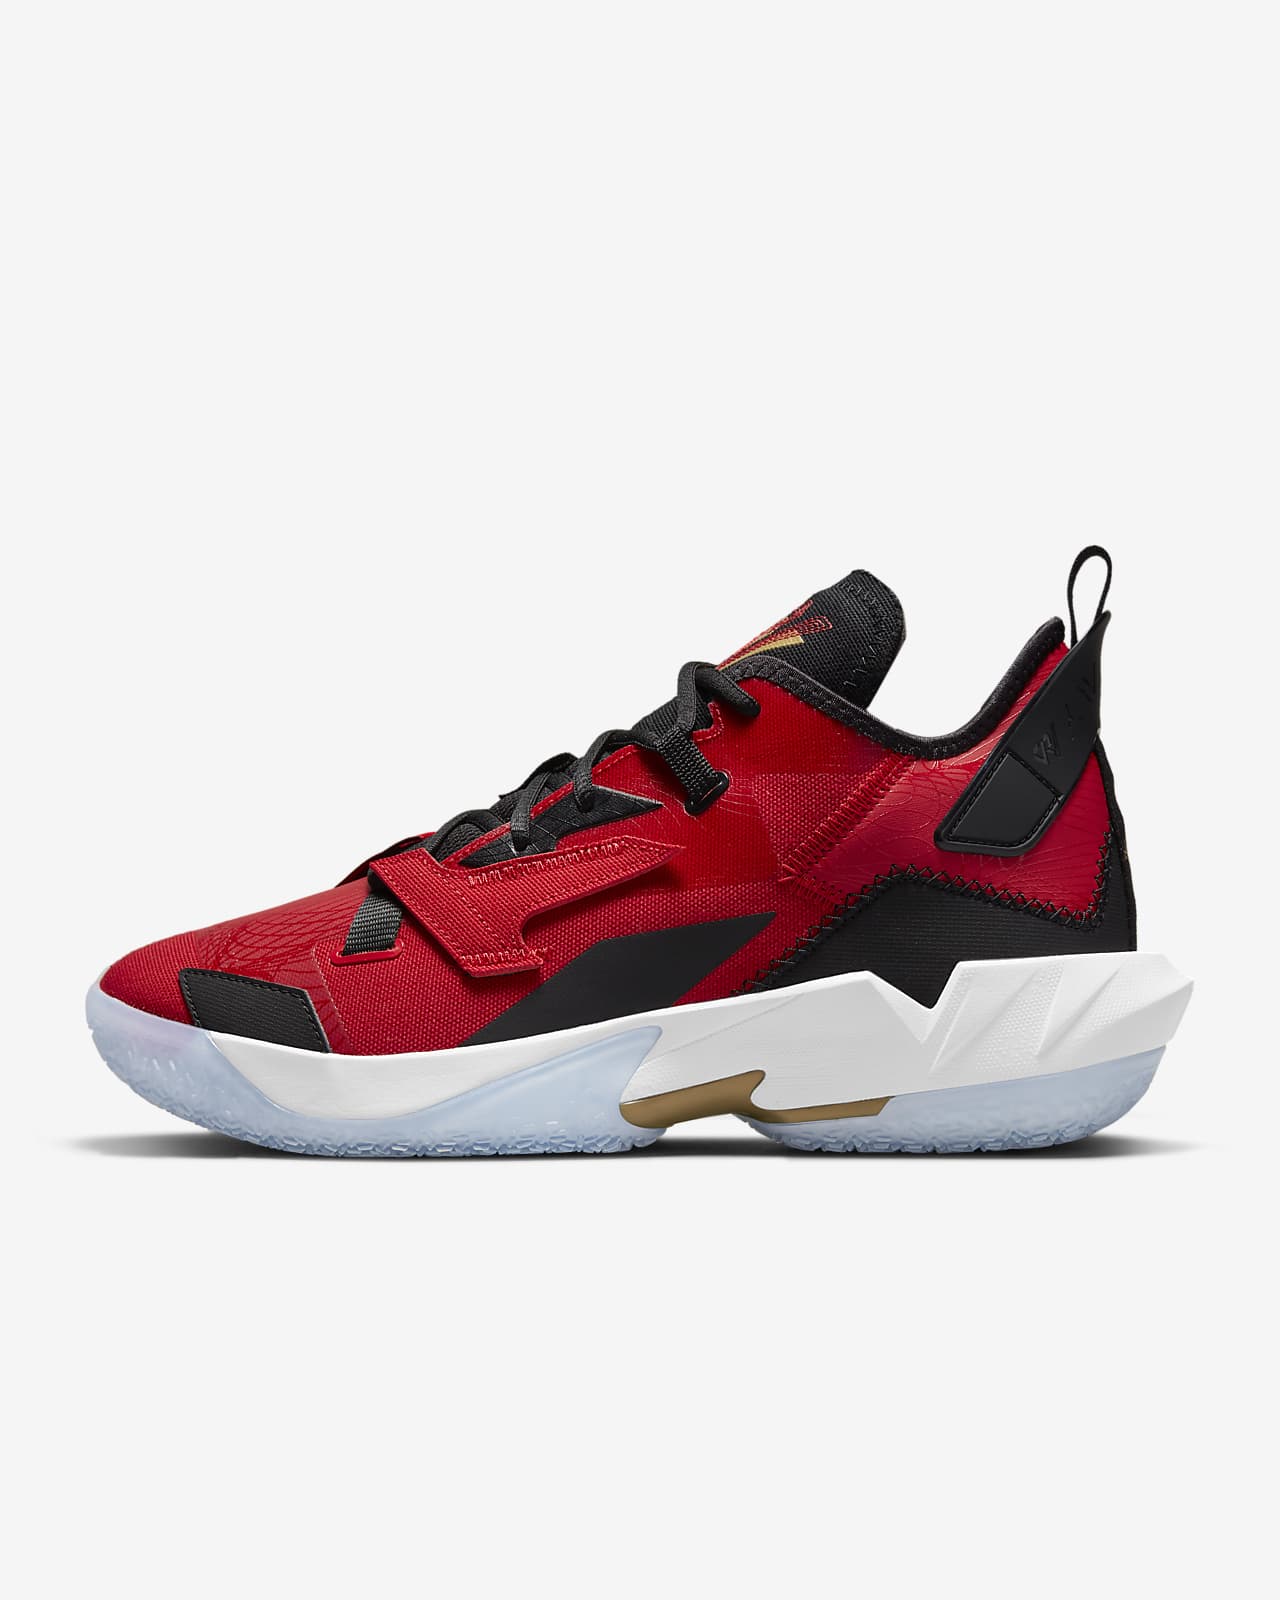 Jordan 'Why Not?' Zer0.4 PF Basketball Shoe